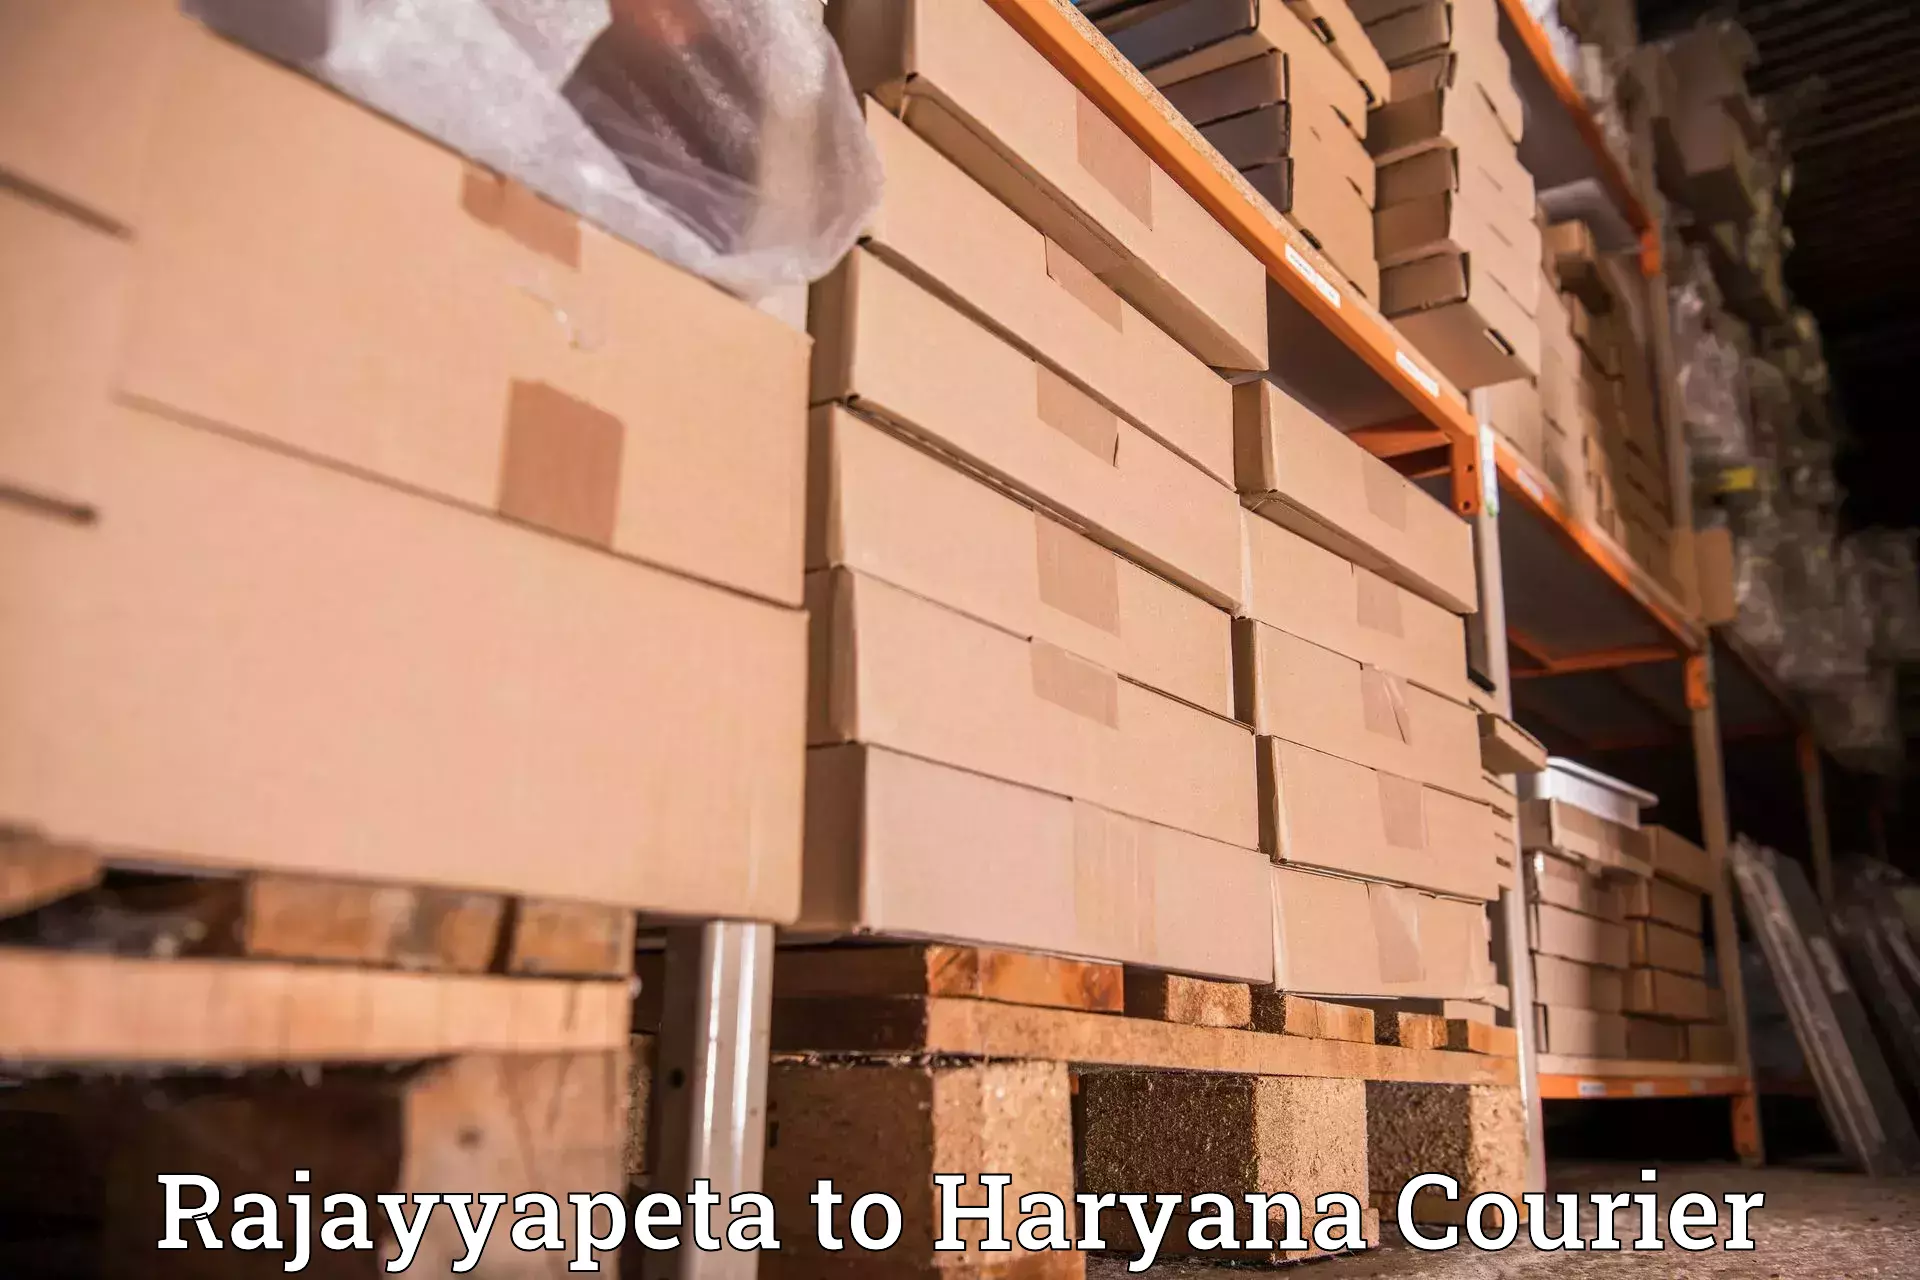 Enhanced tracking features in Rajayyapeta to Palwal